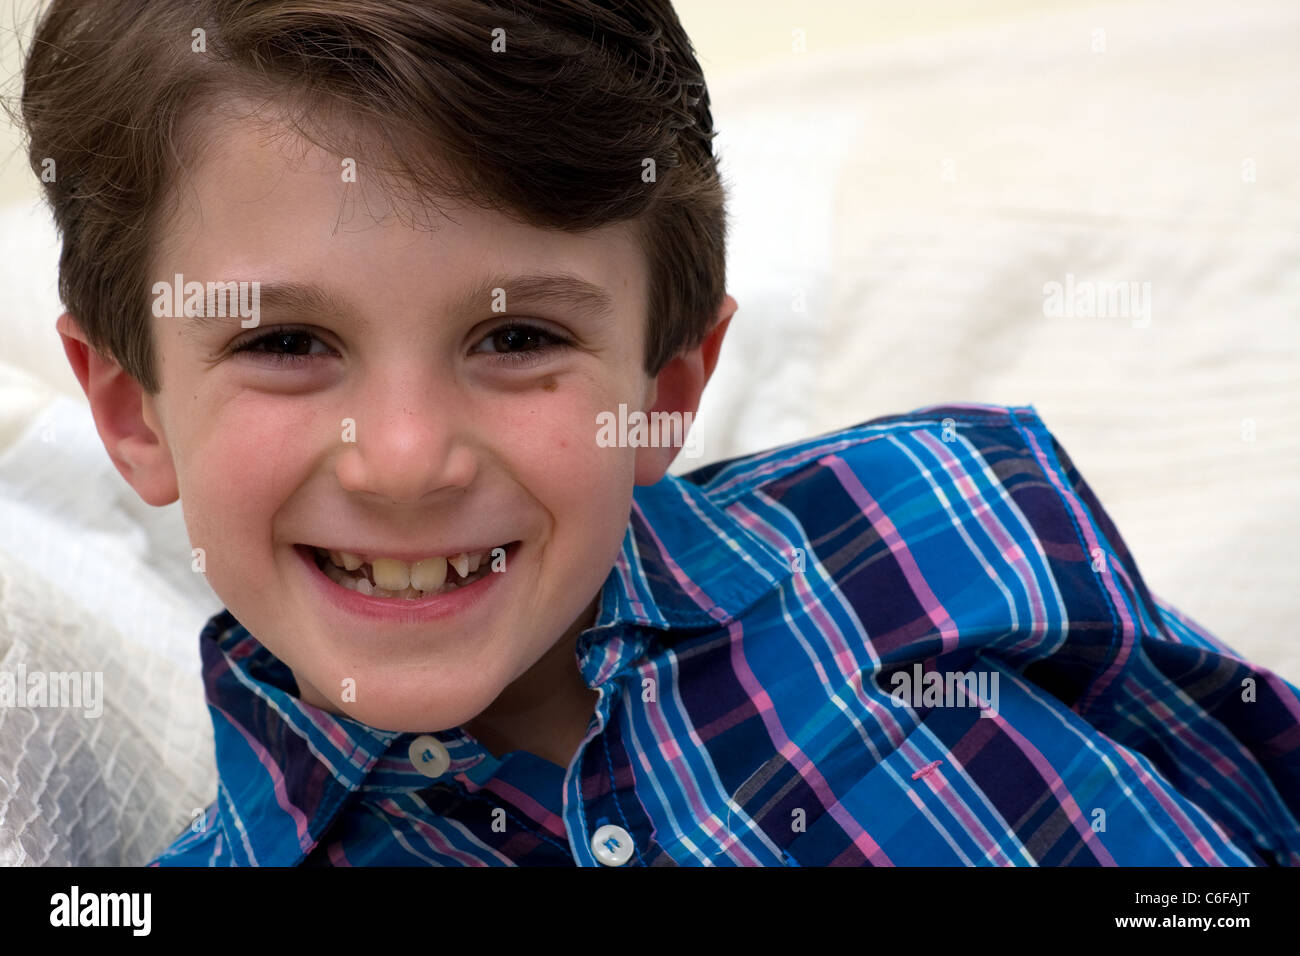 white kid child boy formal dress portrait smiling Stock Photo